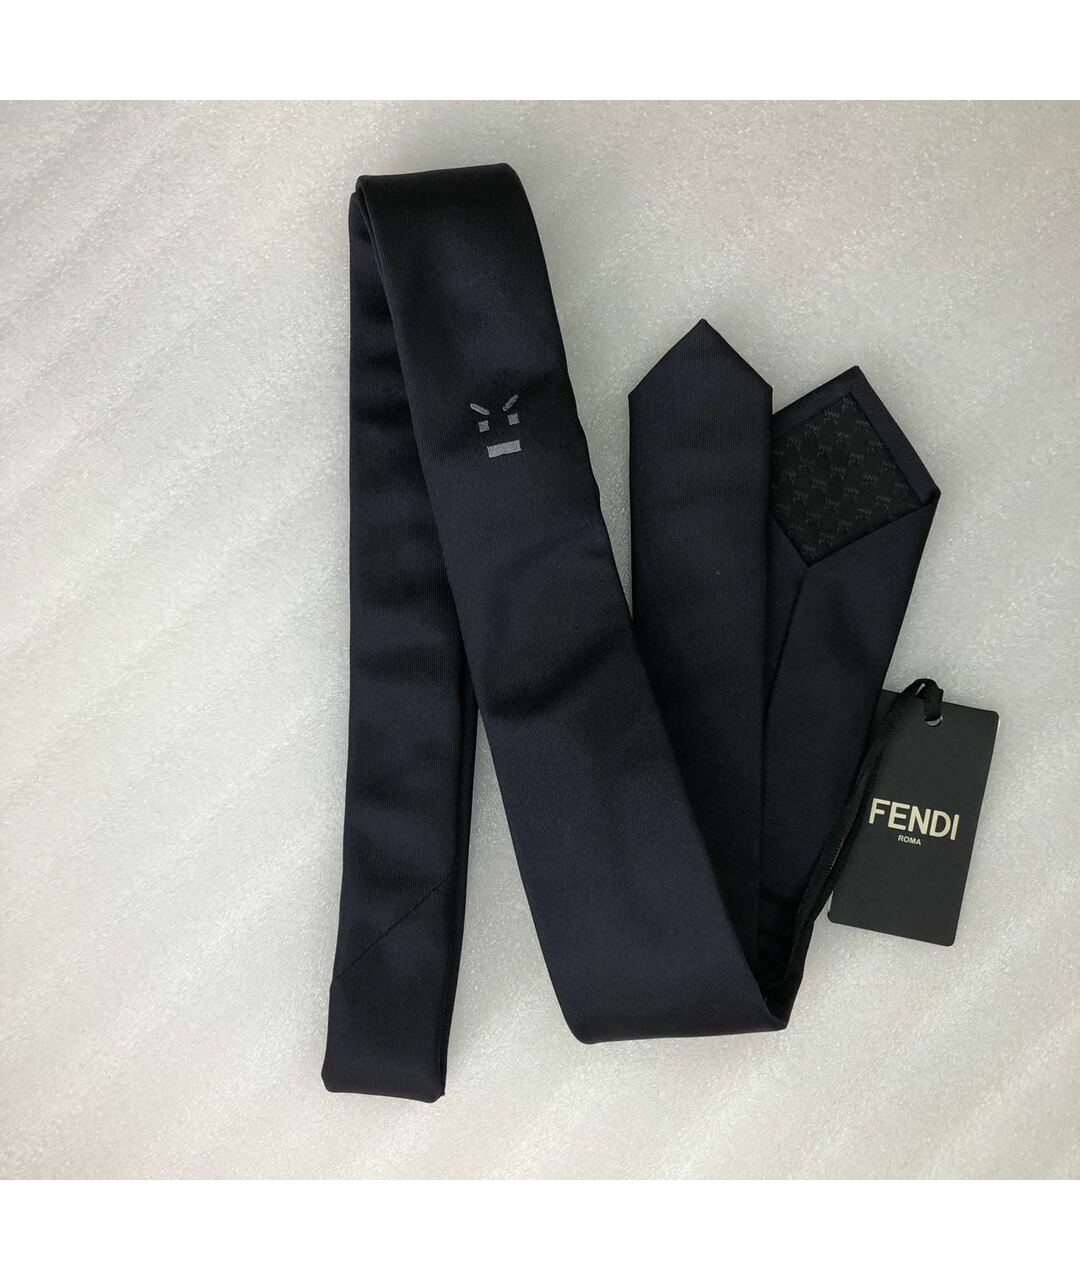 FENDI Темно-синий шелковый галстук, фото 4